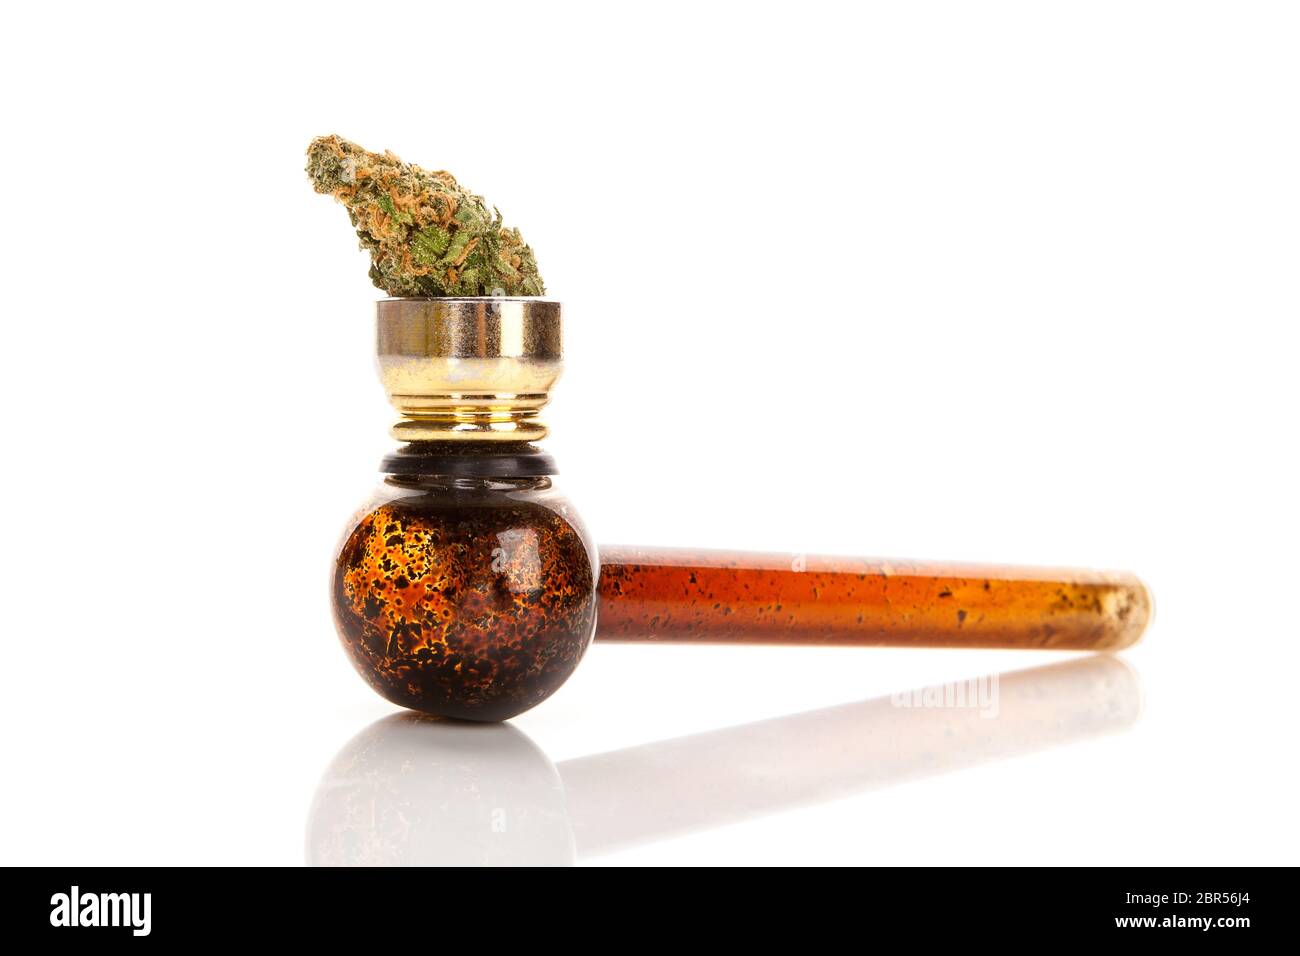 Marijuana bud and glass smoking pipe on white background Stock Photo - Alamy